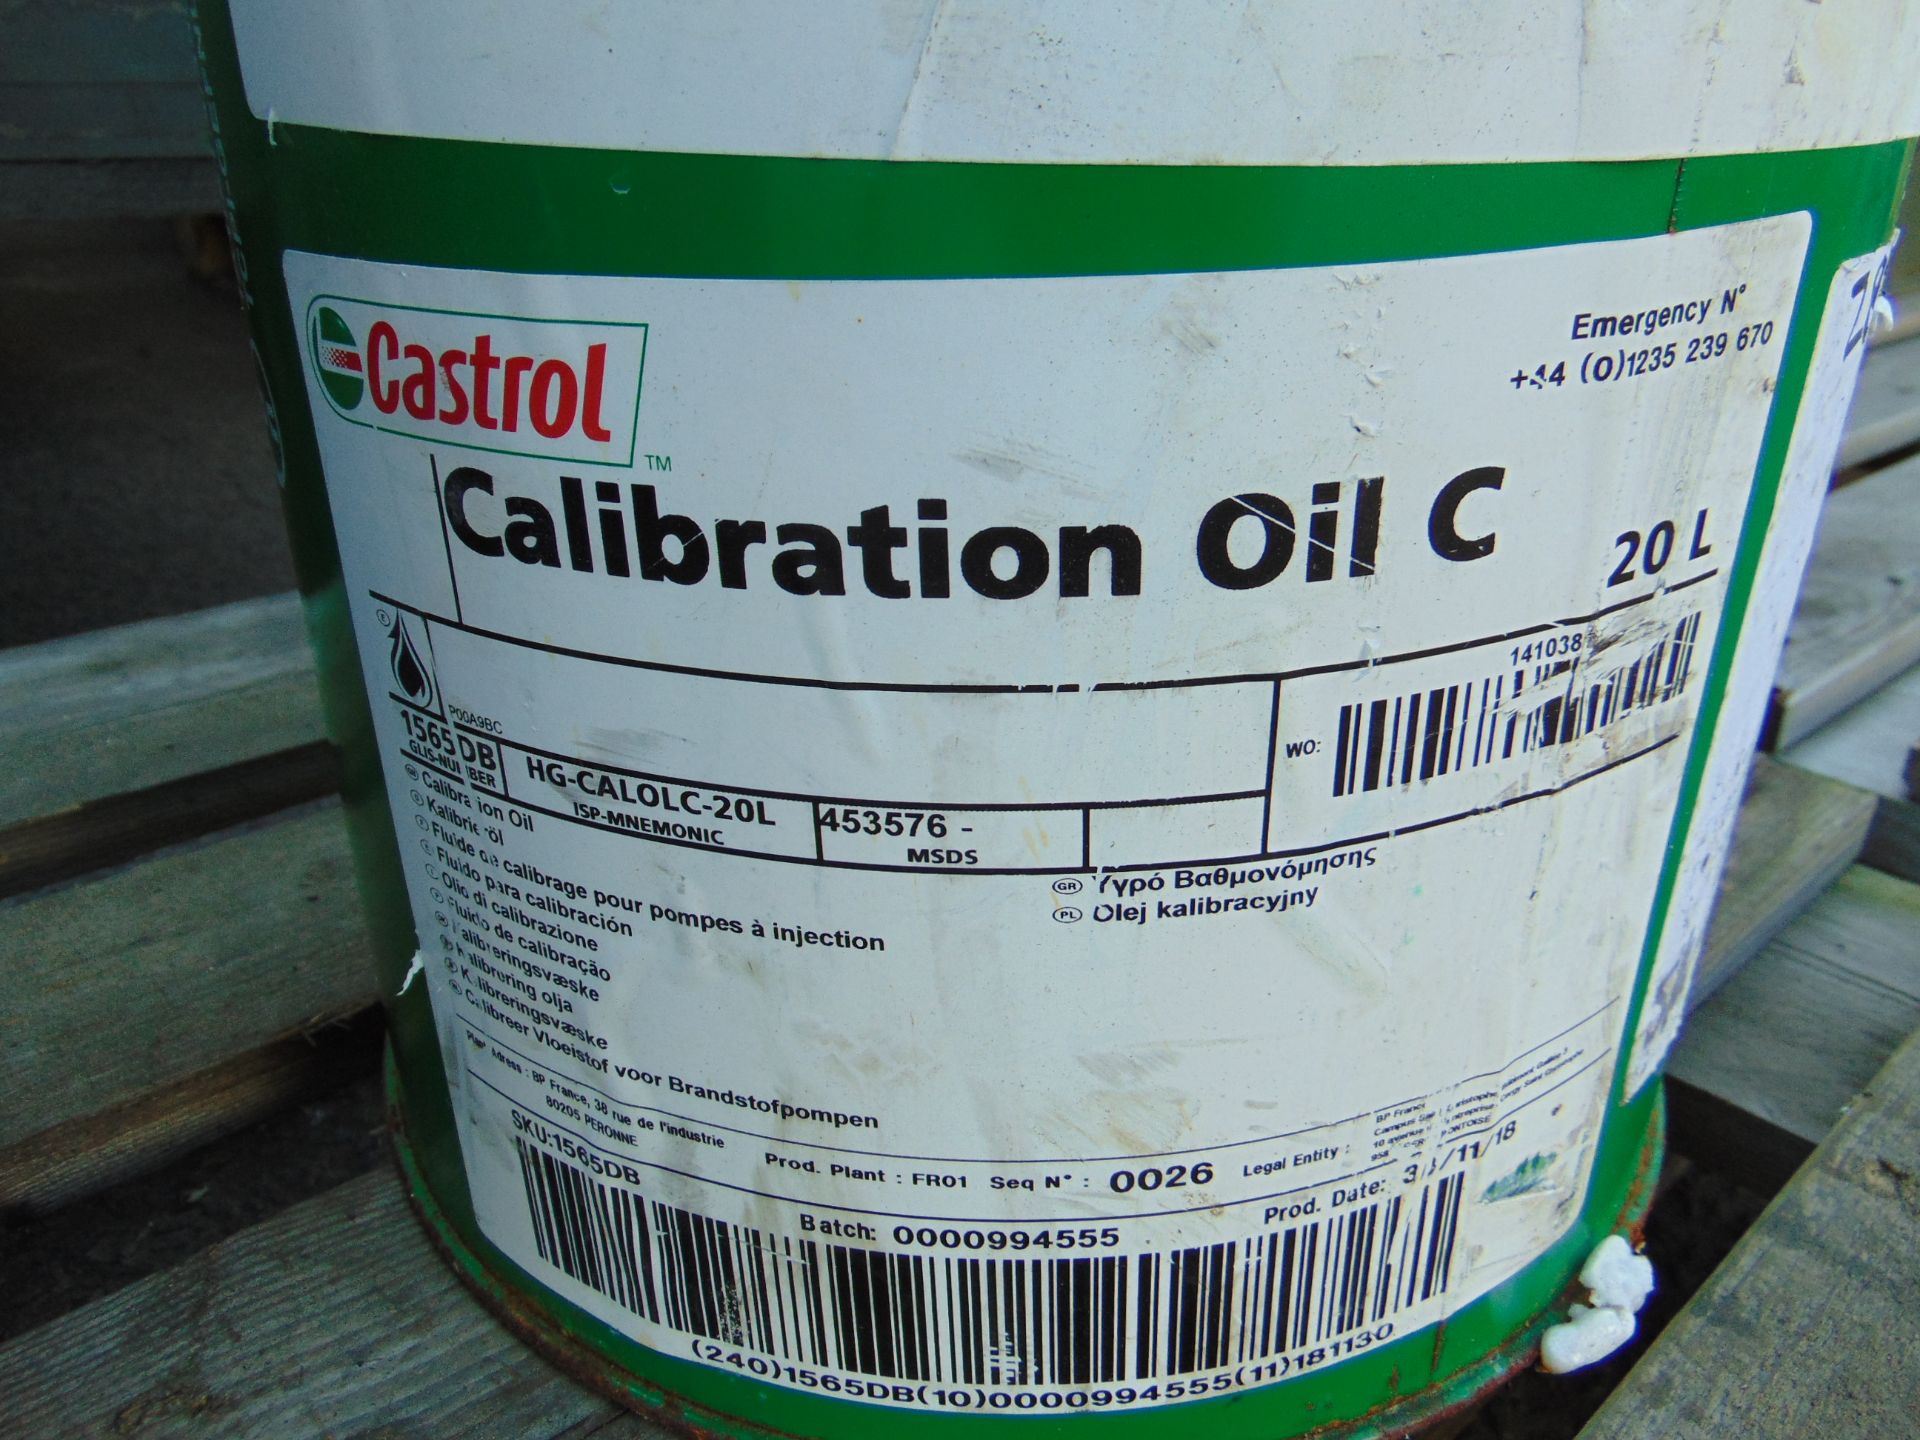 1x 20 litre Drum of Castrol Calibration Fluid C Mineral Oil - Image 2 of 2